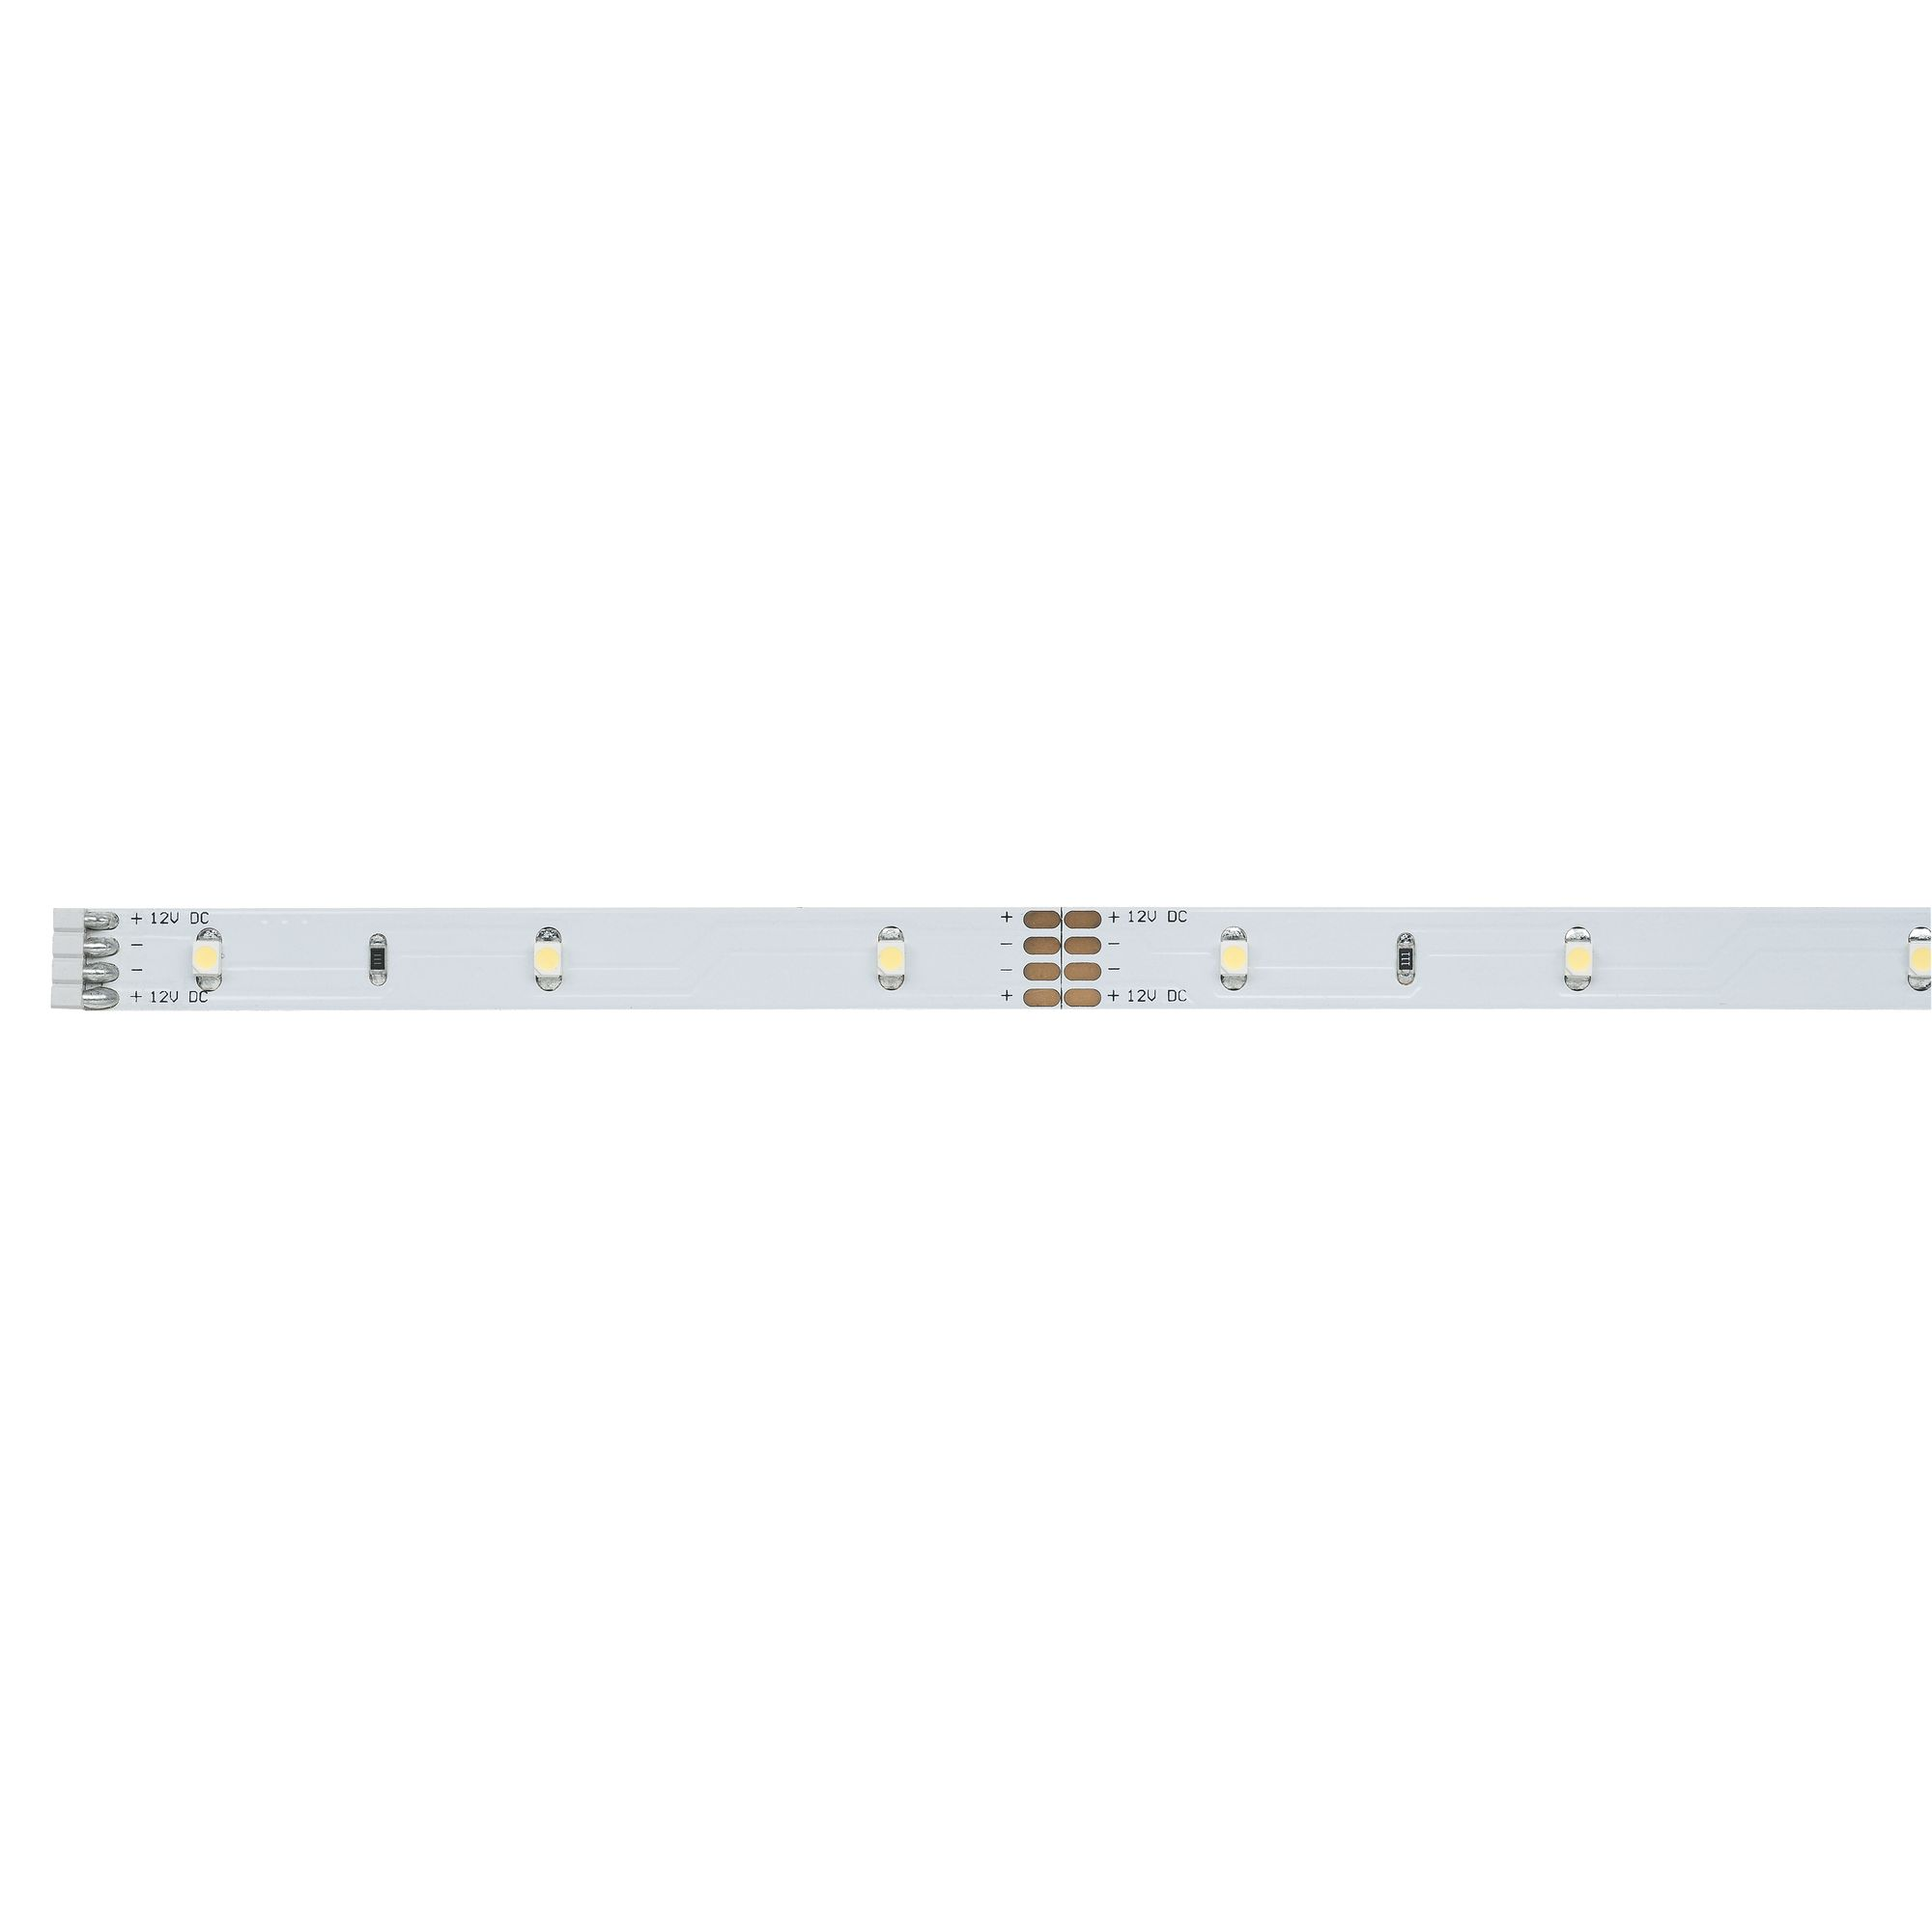 LED-Streifen 'YourLED ECO' 1 m 2,4 W 160 lm warmweiß, weiß + product picture